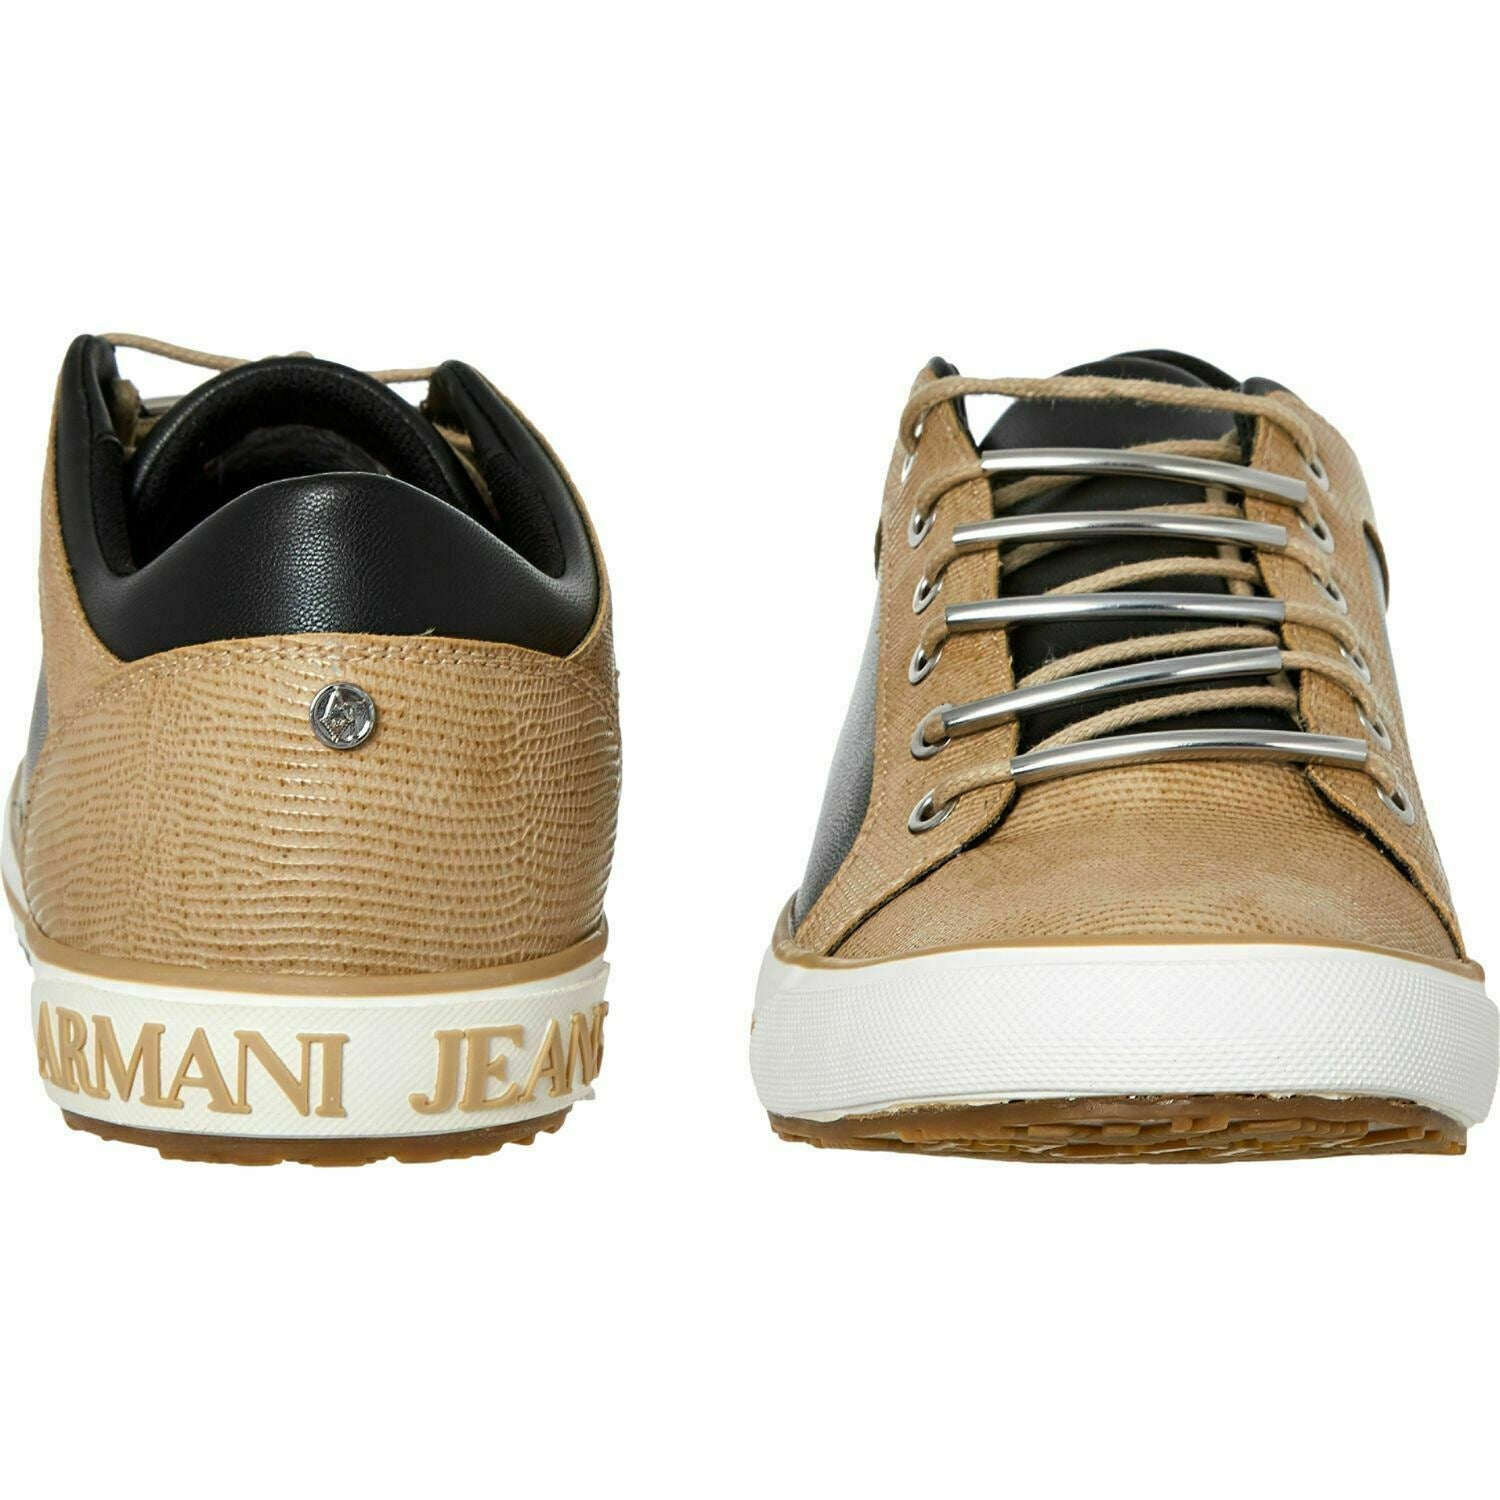 ARMANI JEANS Women's Reptile Effect Trainers Sneakers, Beige/Black, UK 6 EU 39